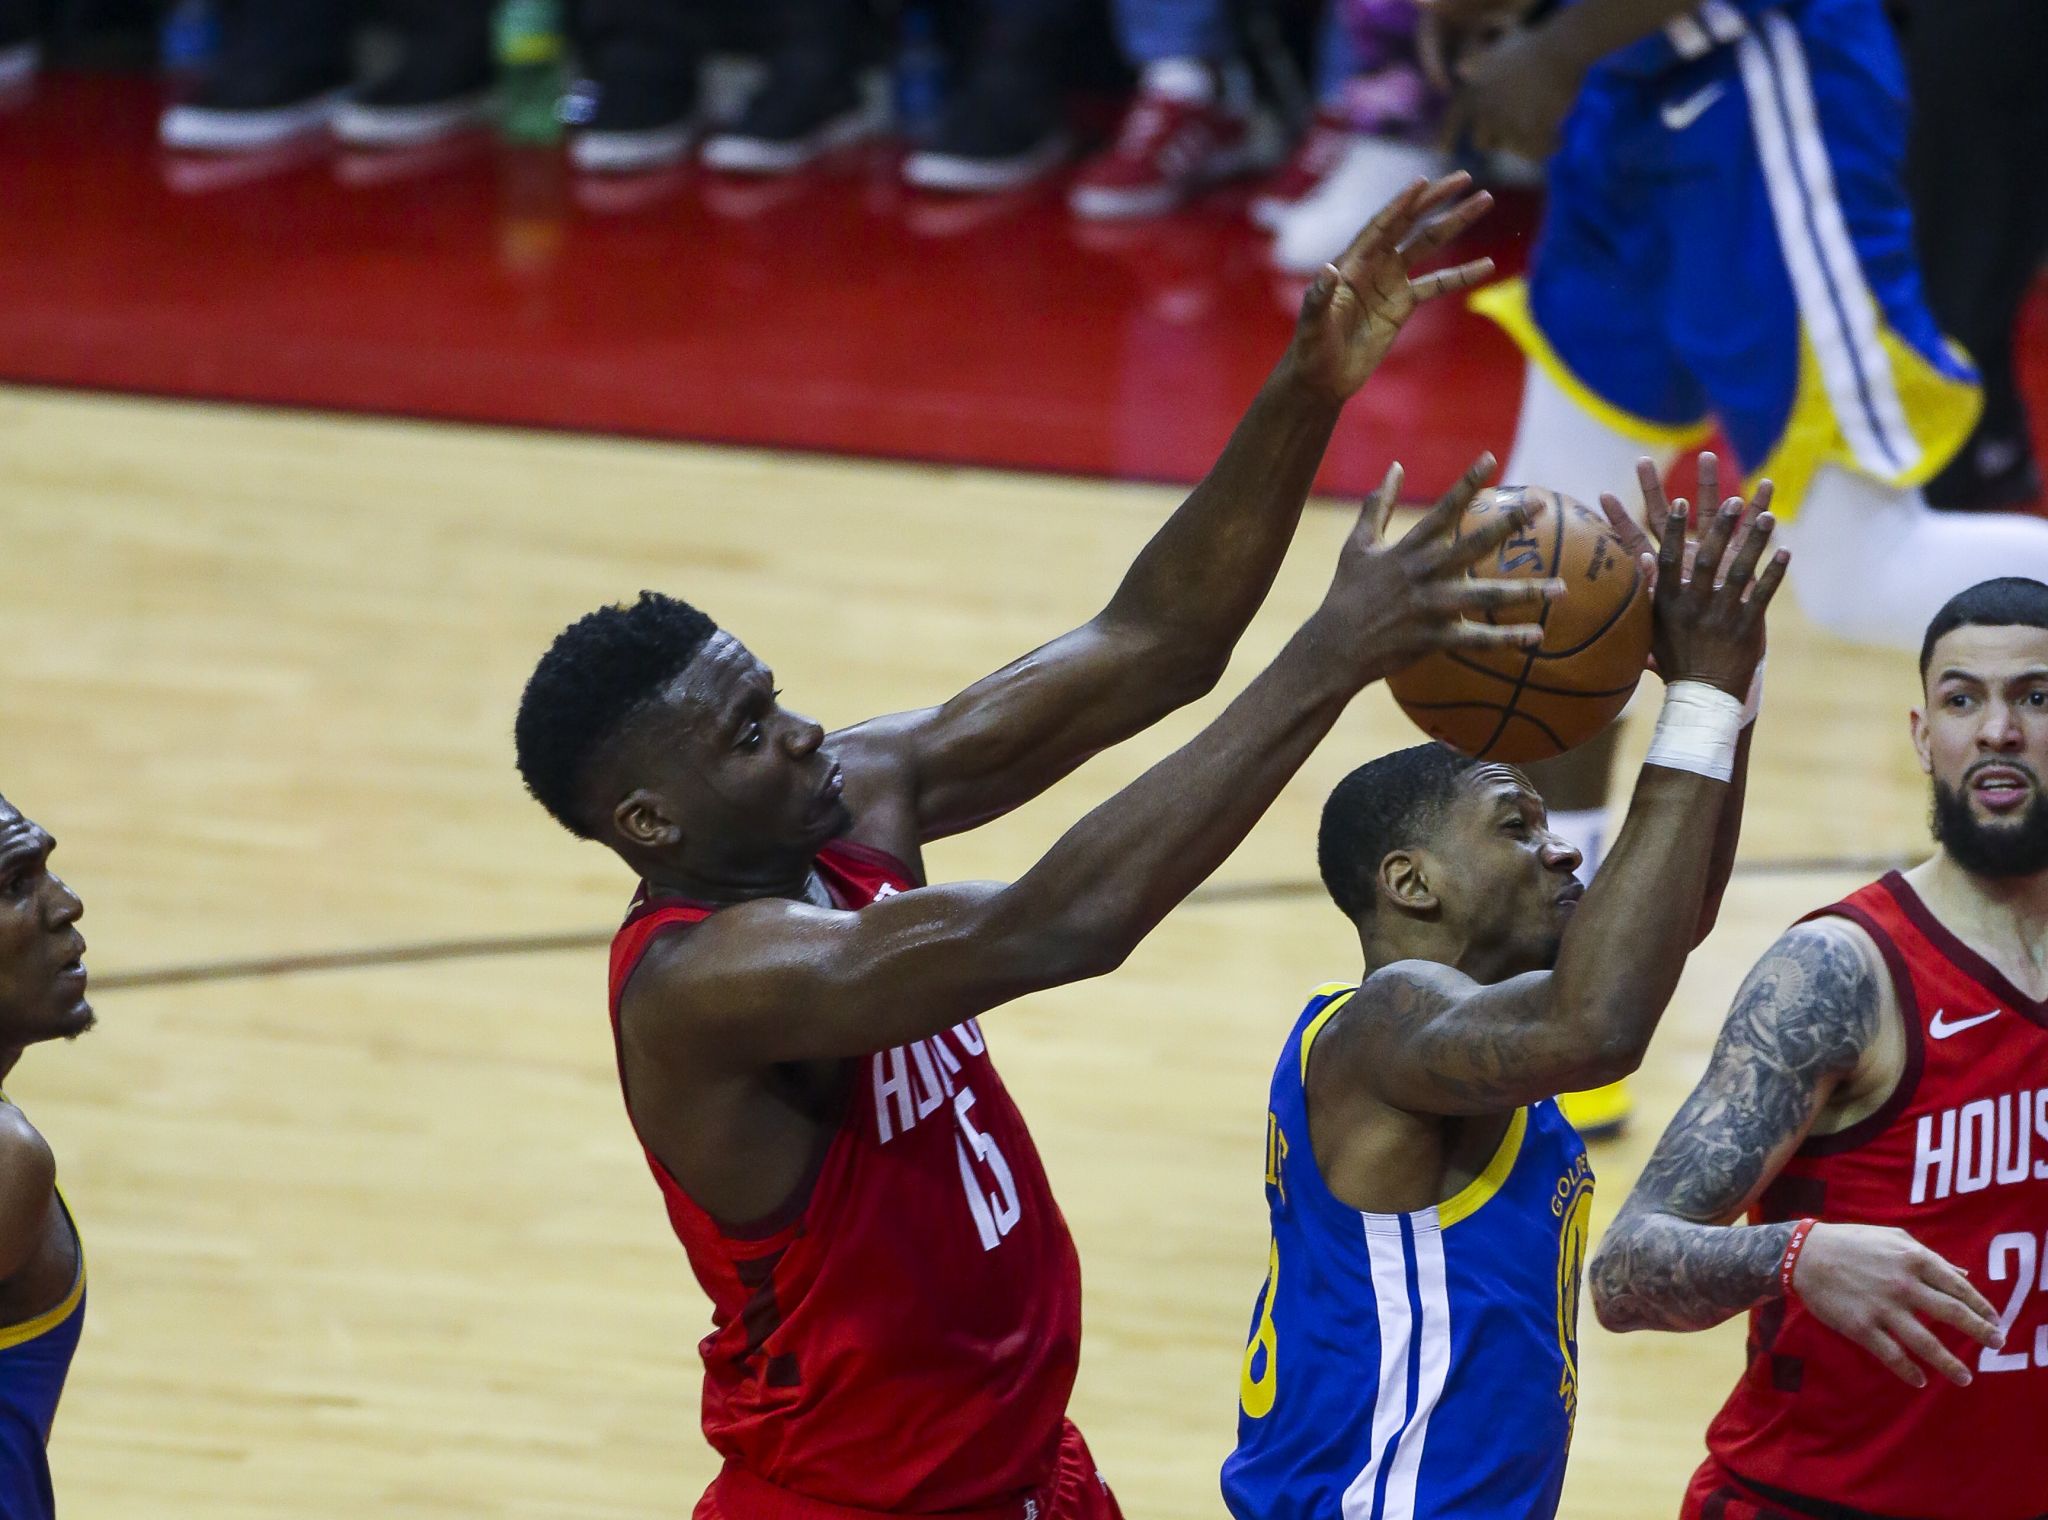 On TV/Radio: ESPN's Jeff Van Gundy says Rockets' fate tied to rebounds